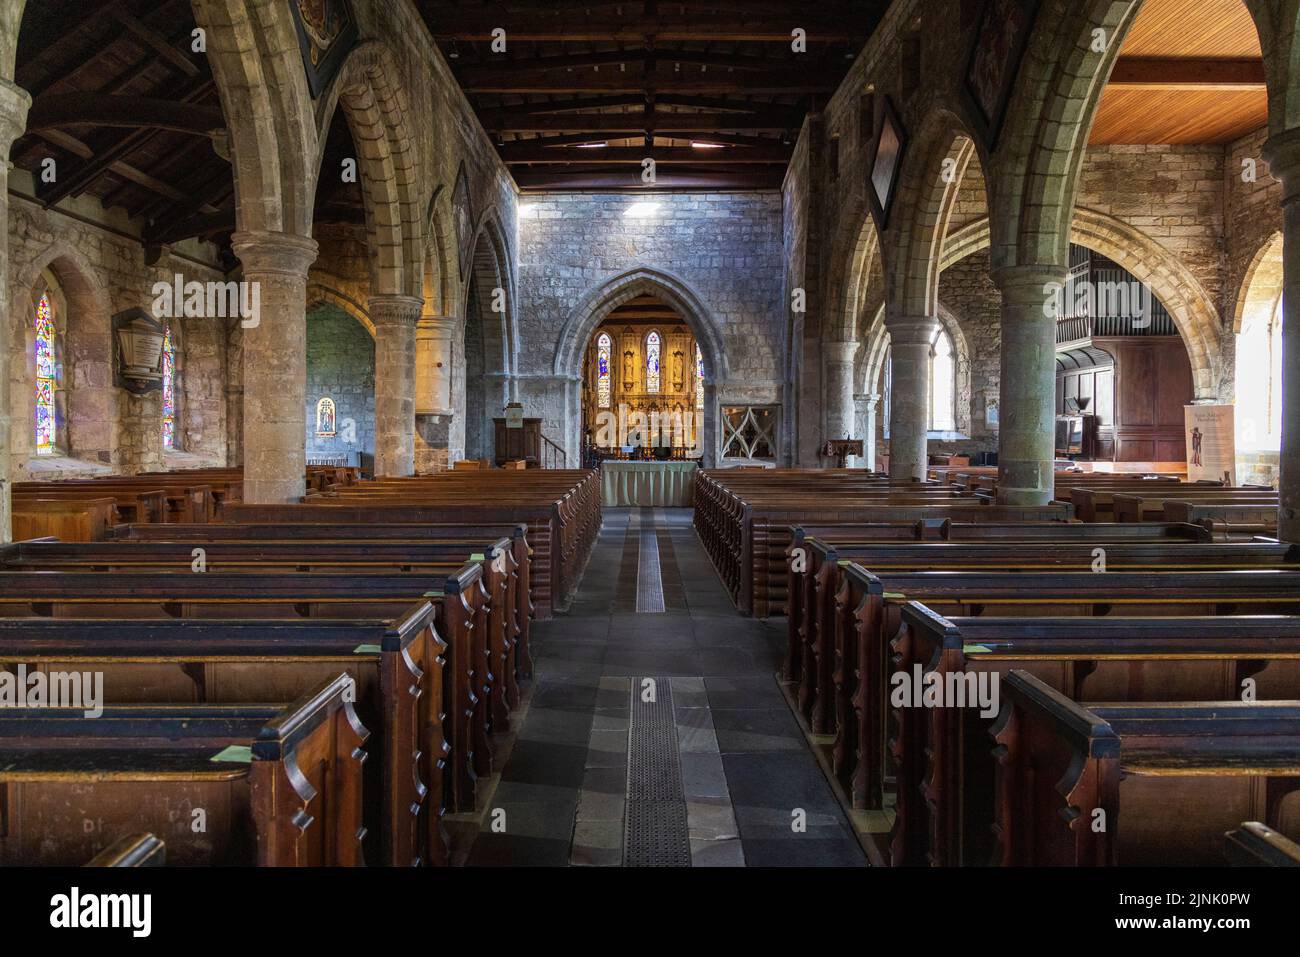 The interior of the 12th Century church of St Aidan at Bamburgh, Northumberland, England Stock Photo